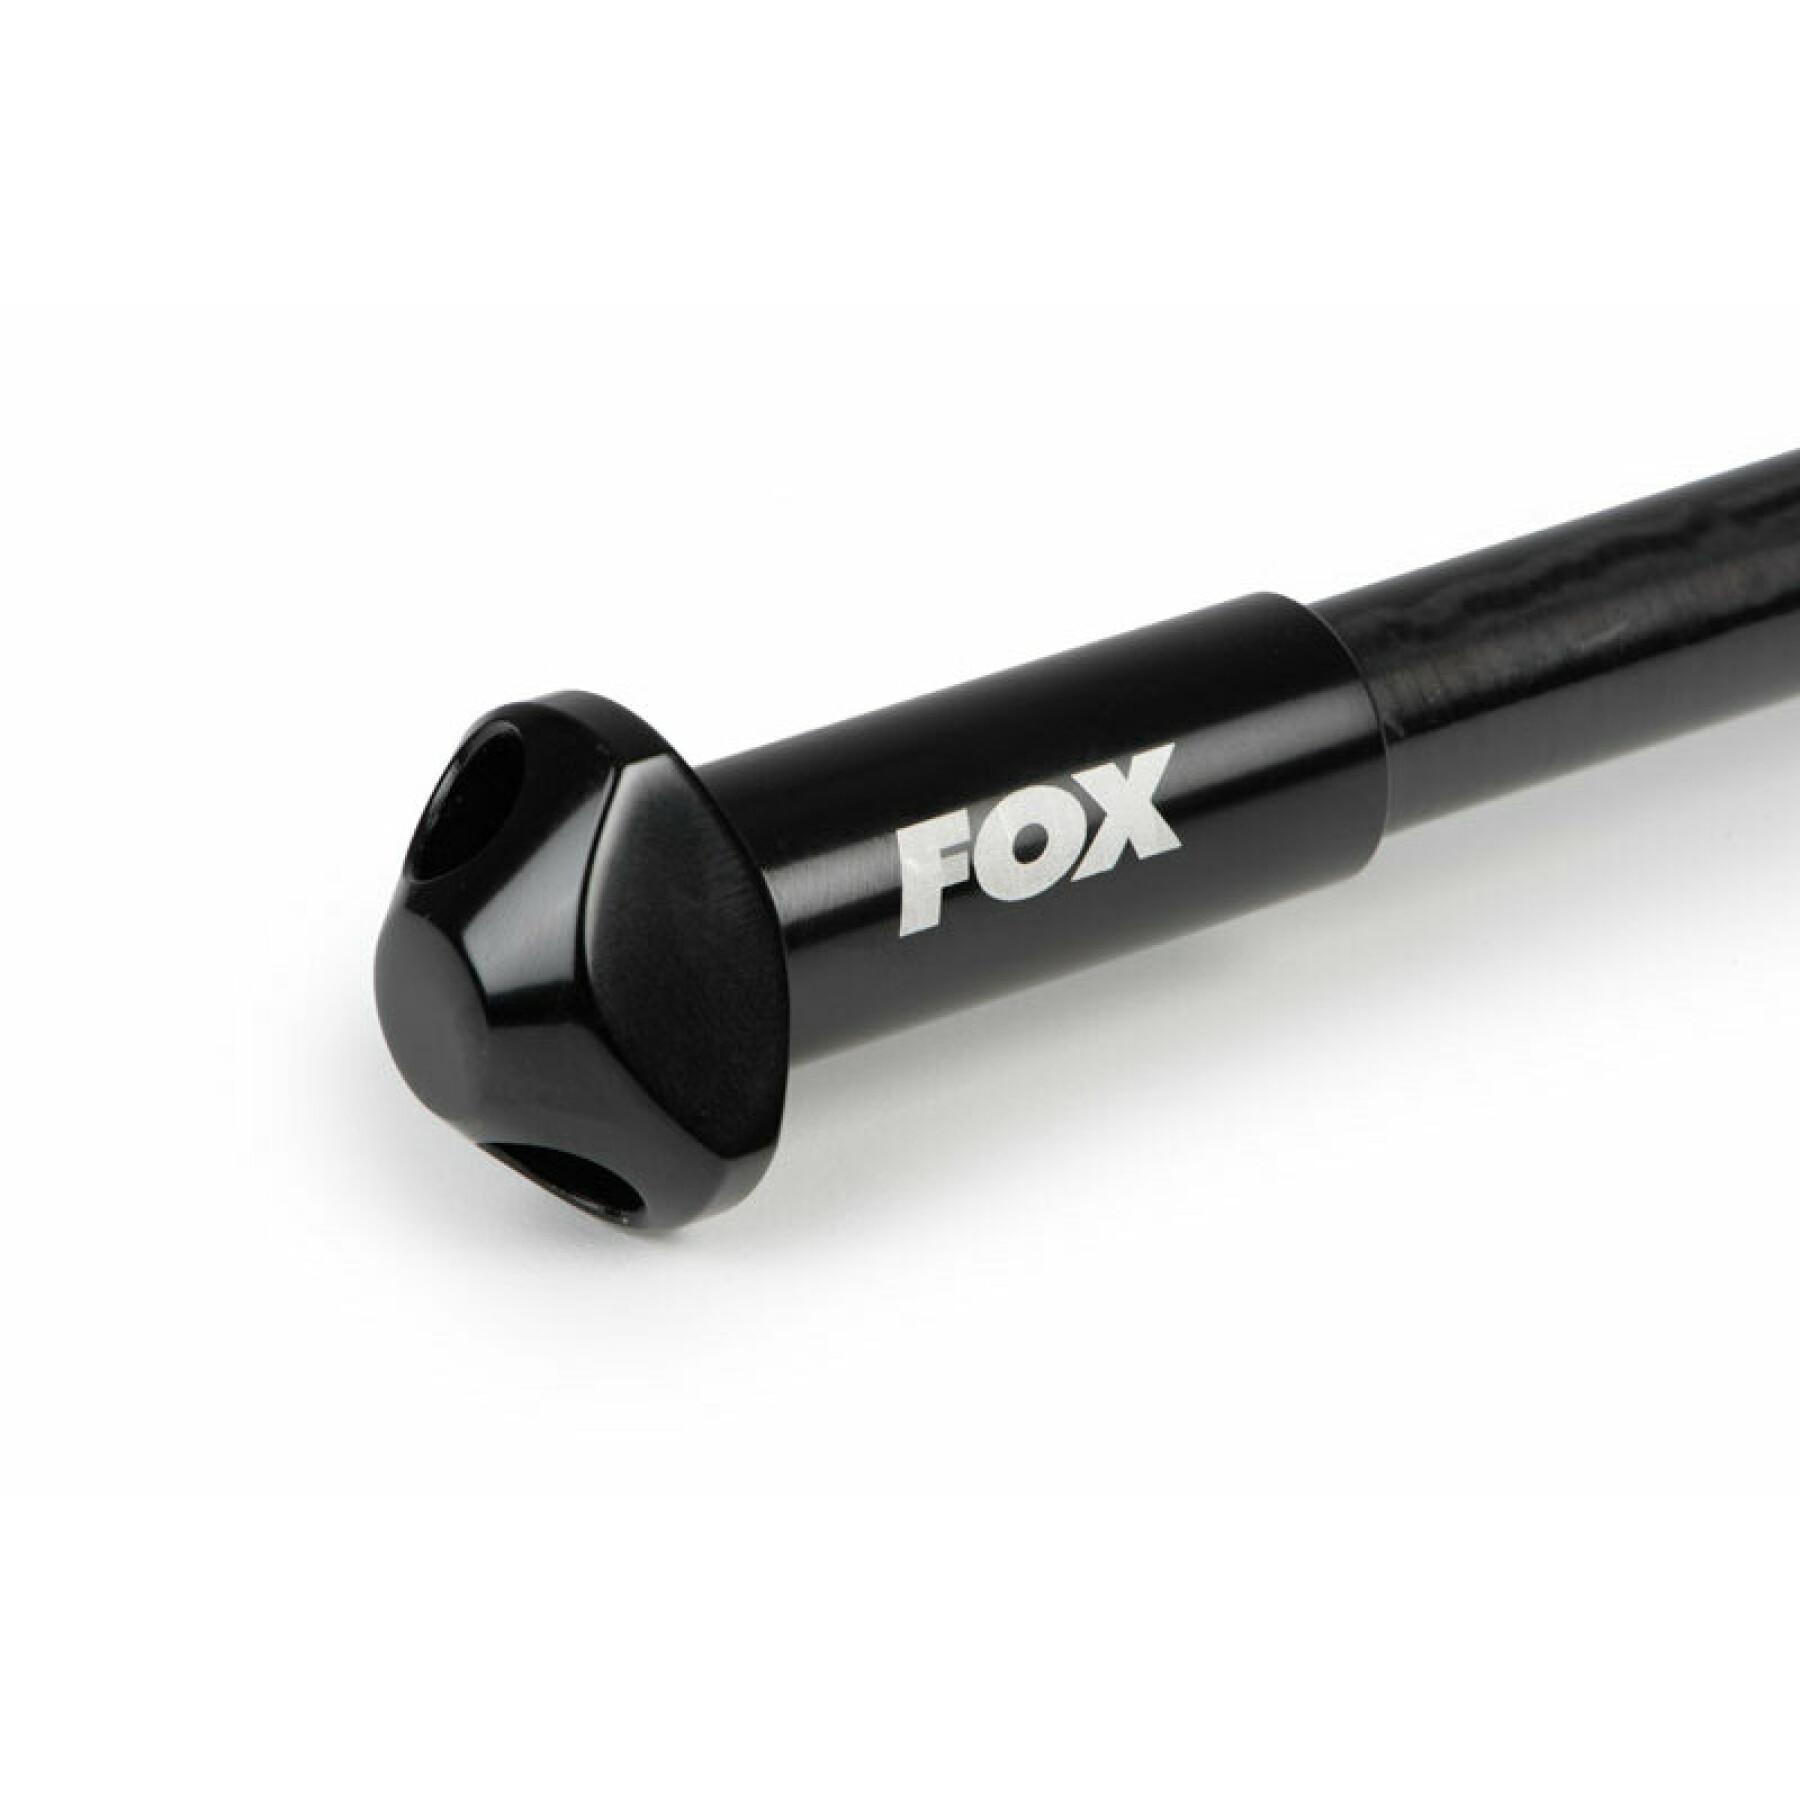 Horyzont netto Fox X4 46"